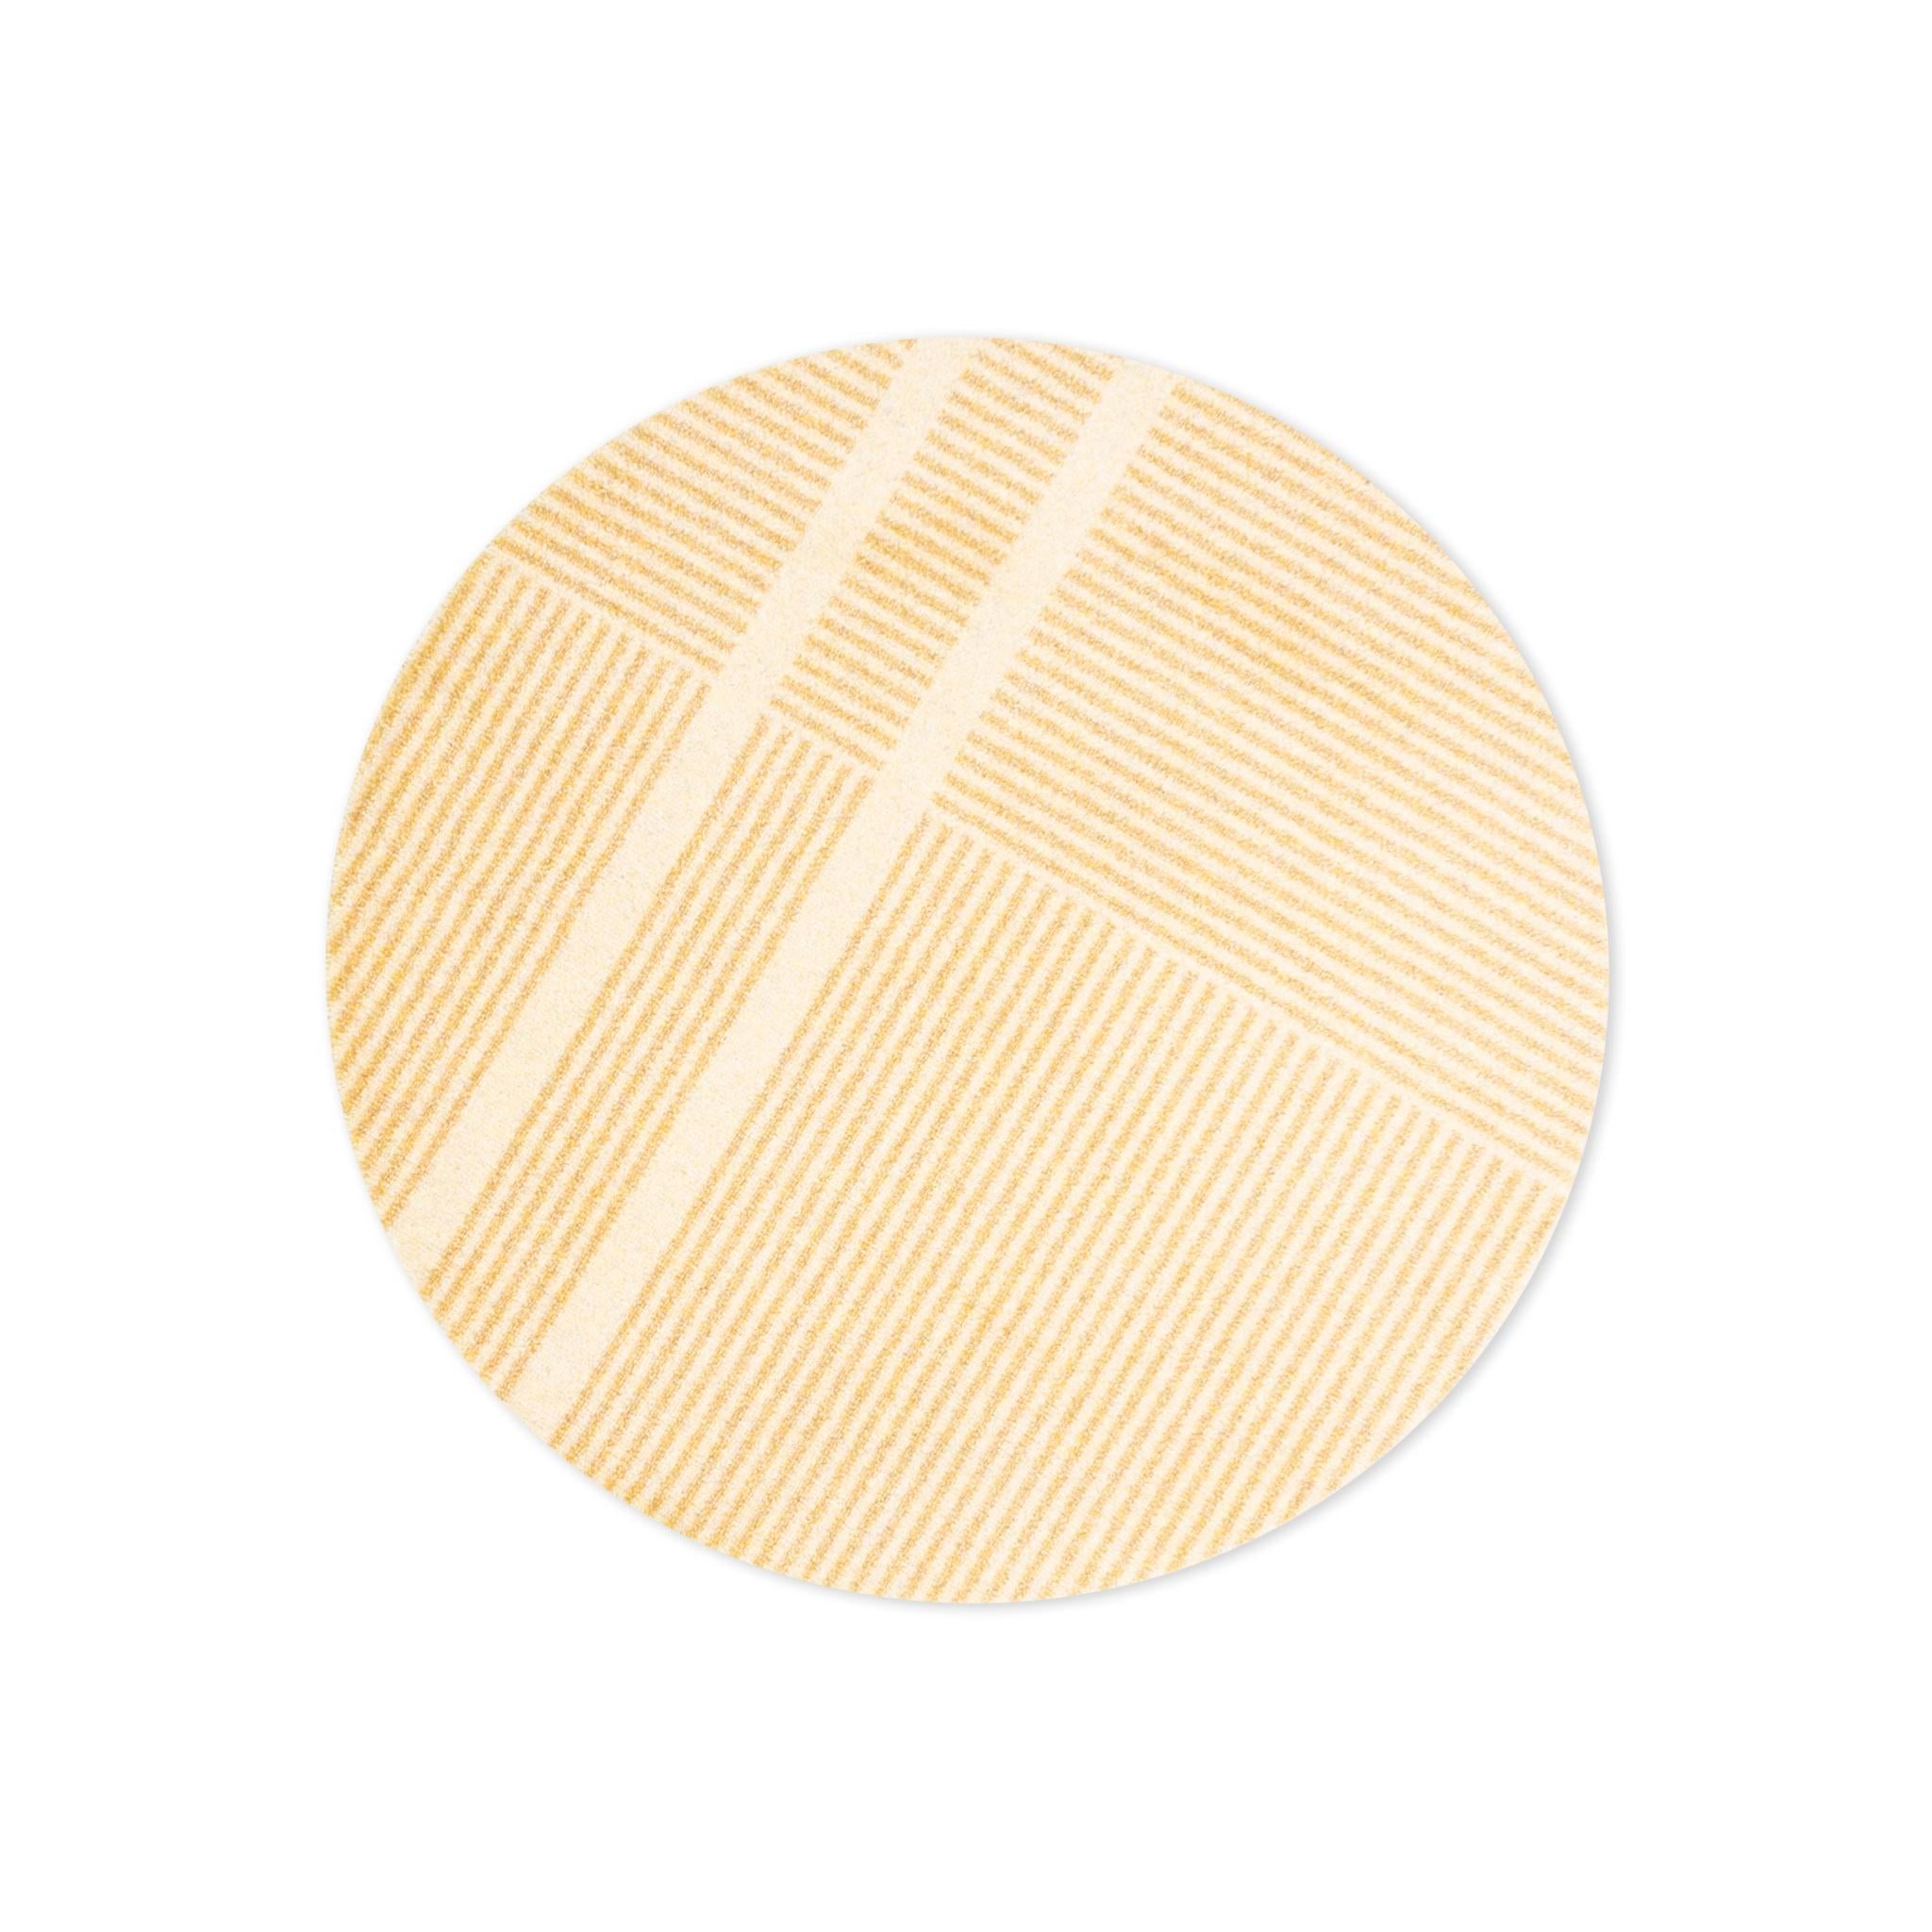 Heymat Doormat løype solrig gul, 100x100cm